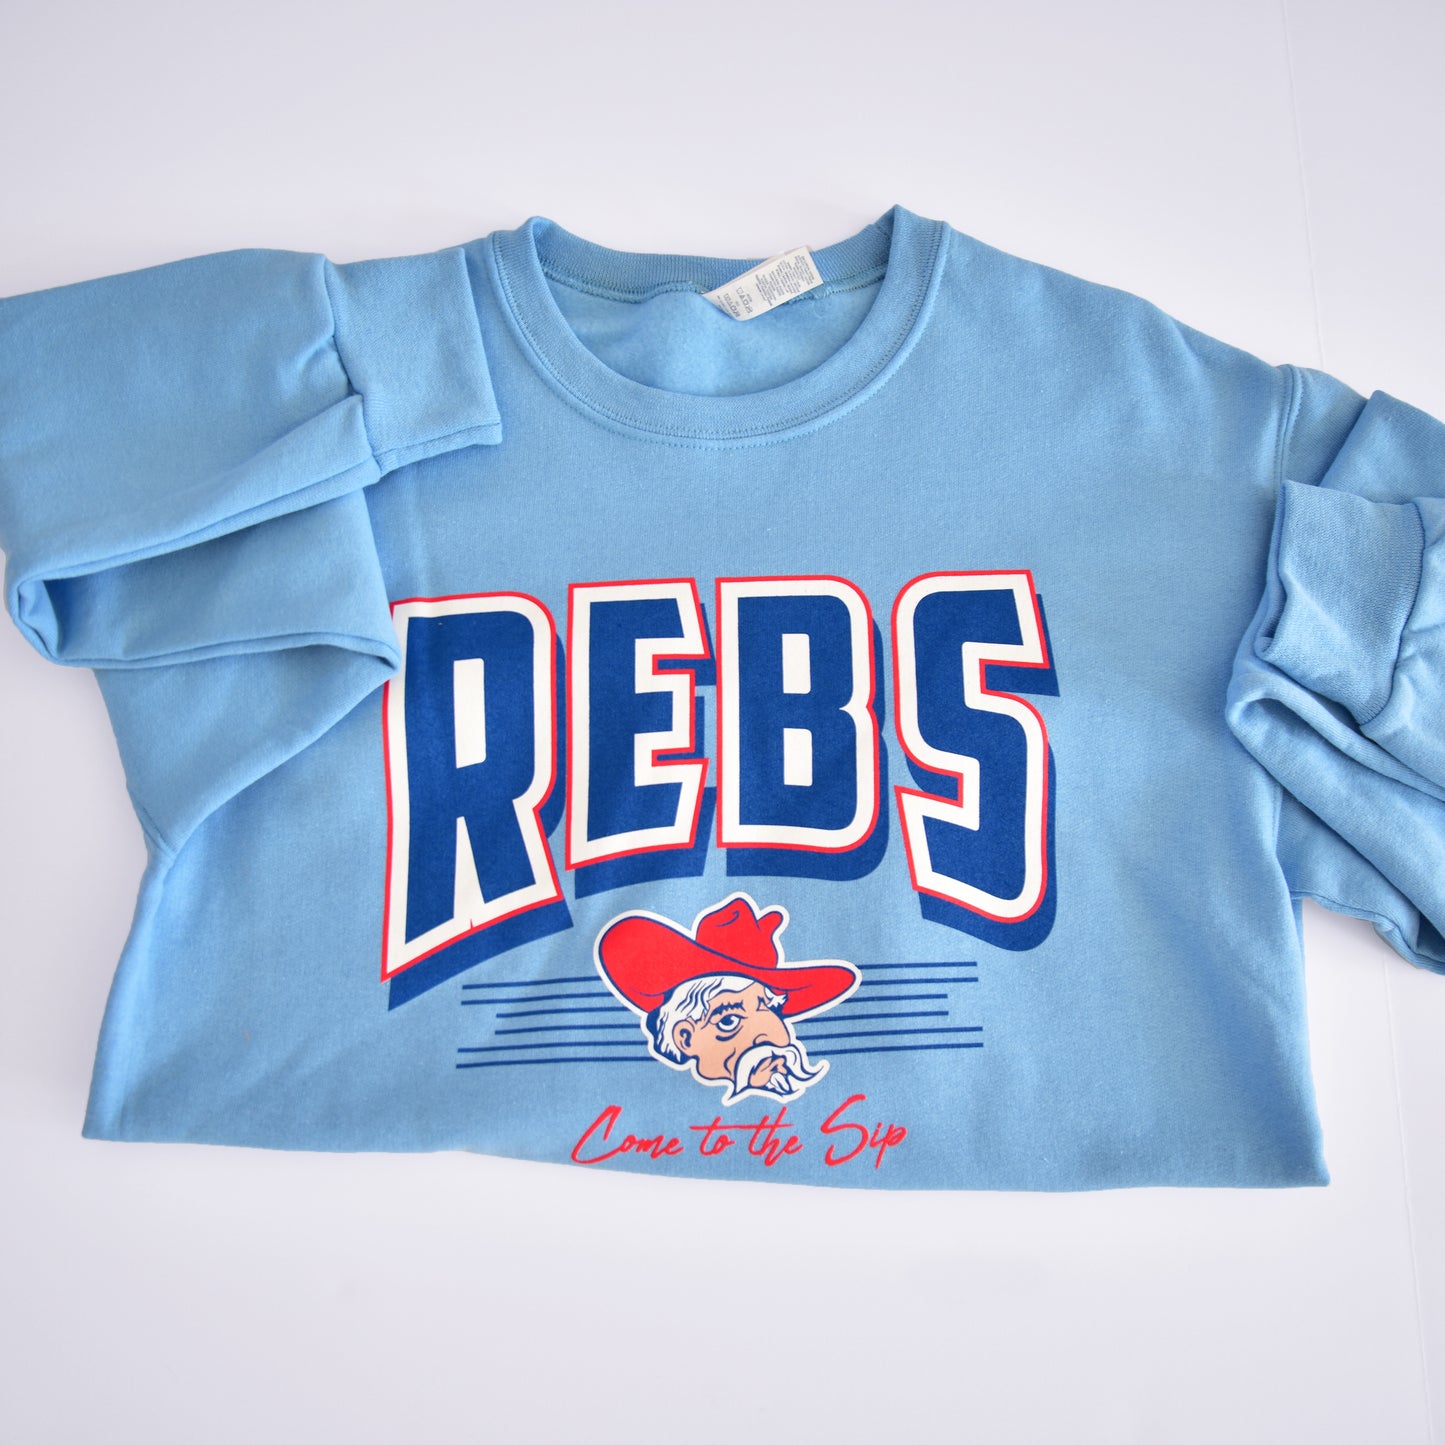 Rebs Mascot Sweatshirt